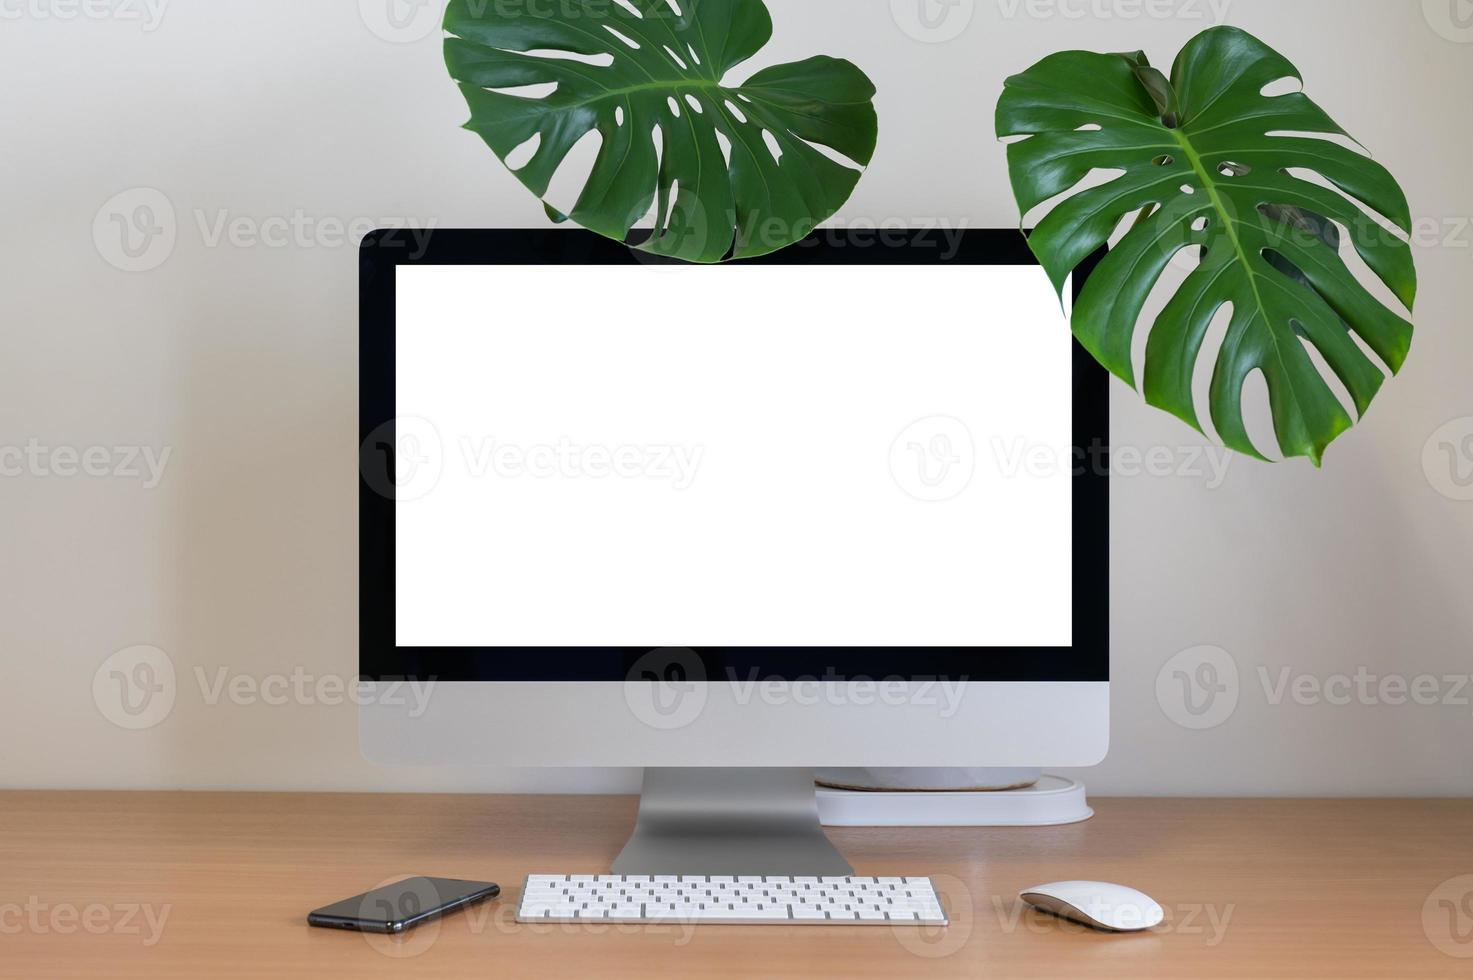 monstera plant en tafelblad op minimalistisch dek foto